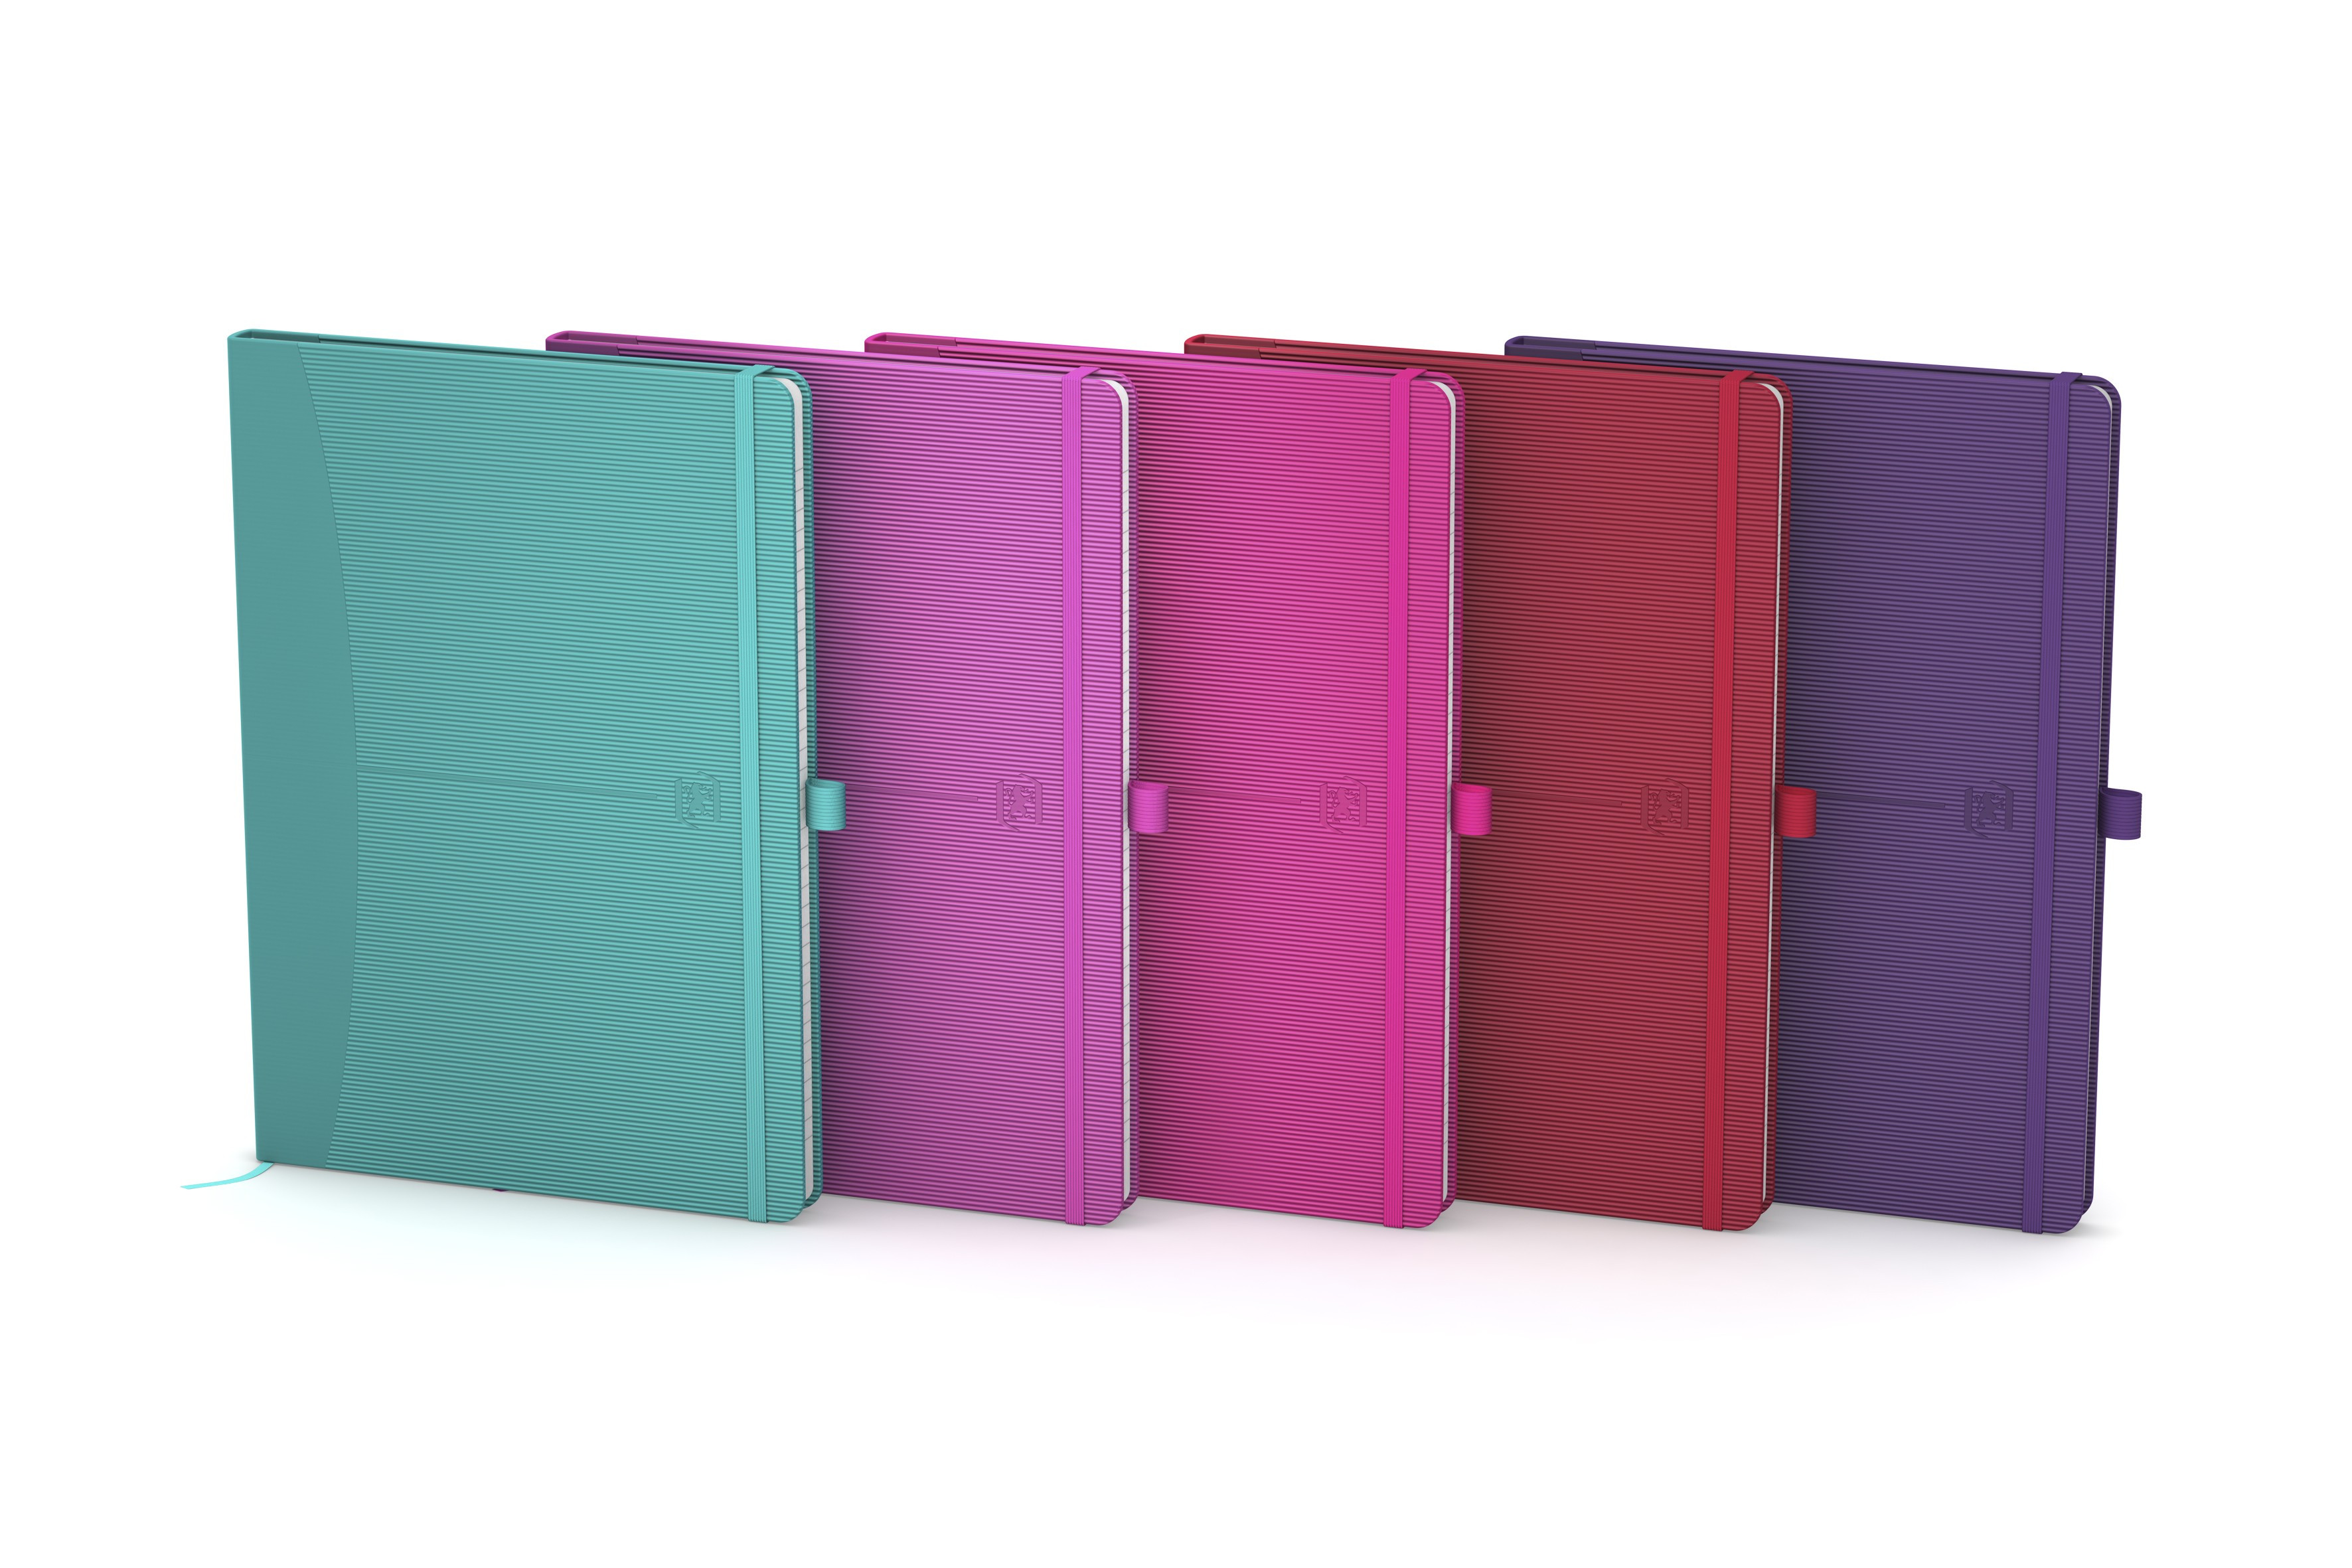 Caiet cu elastic, A5, OXFORD, coperta carton rigid, buzunar, 80 file 90g/mp, dictando culori intense